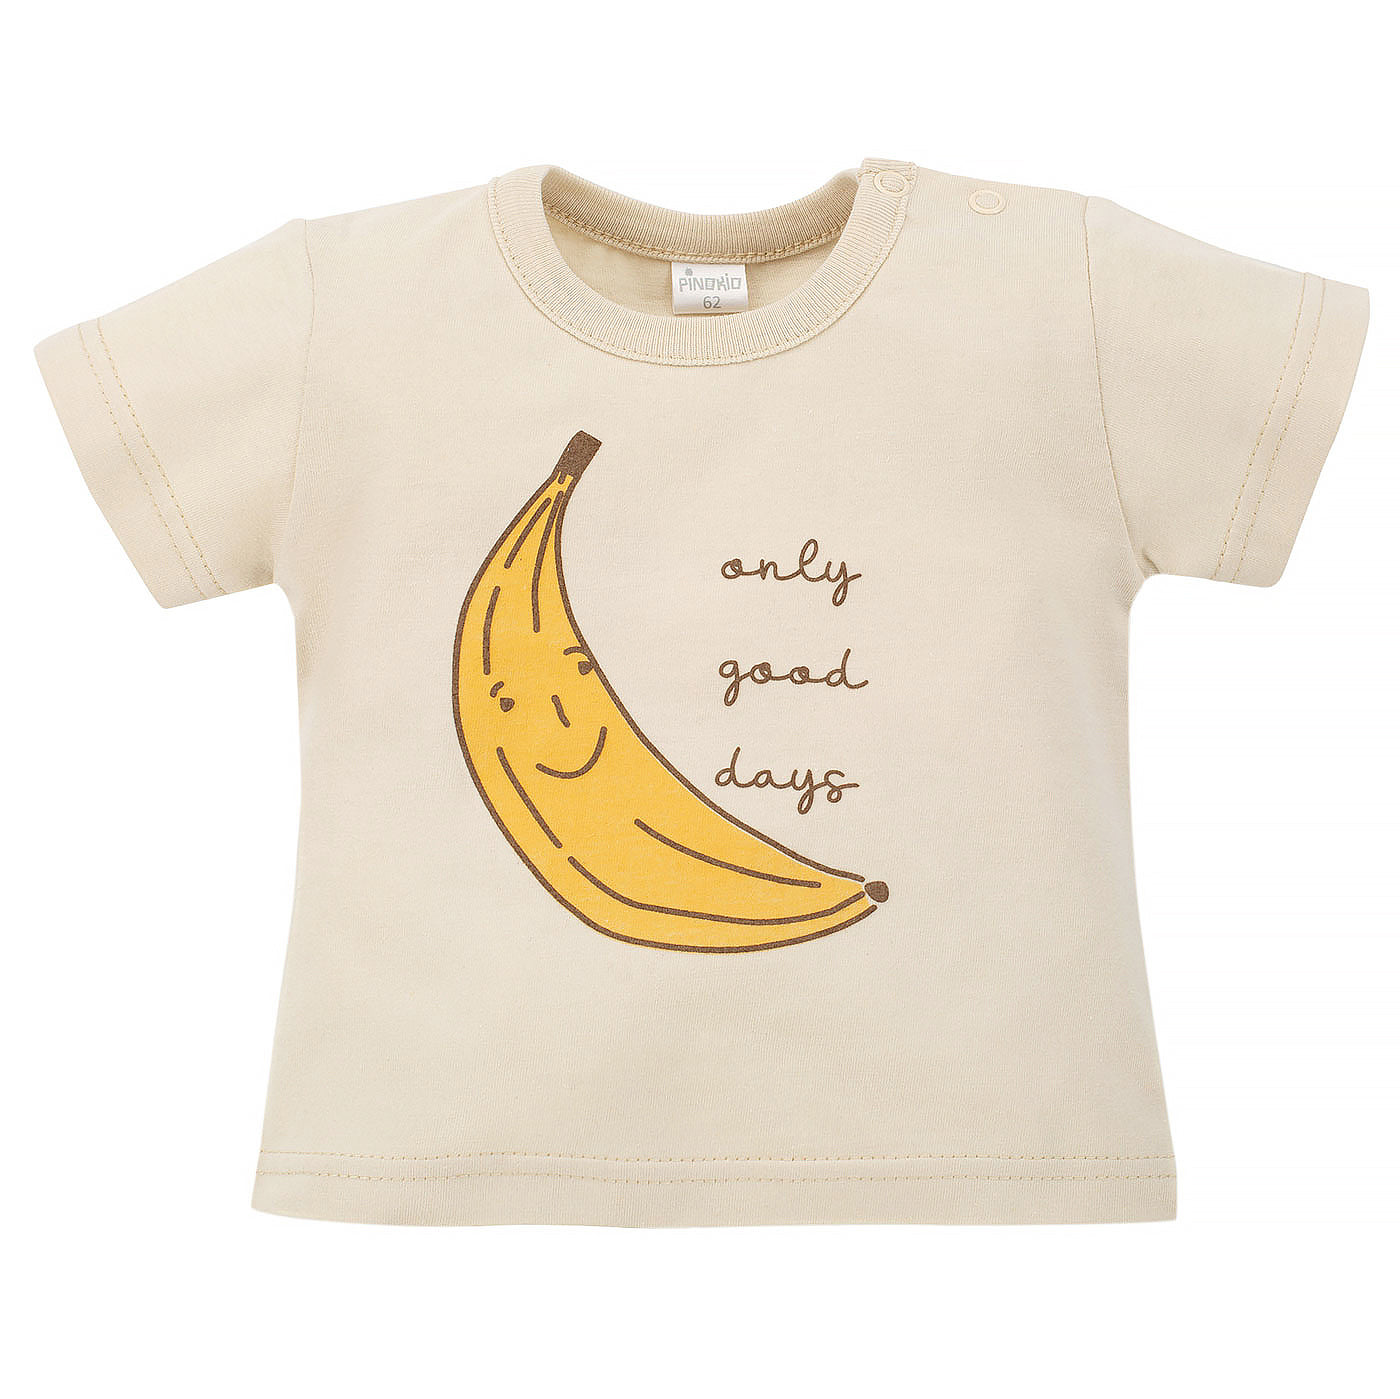 Free soul t-shirt - Banana